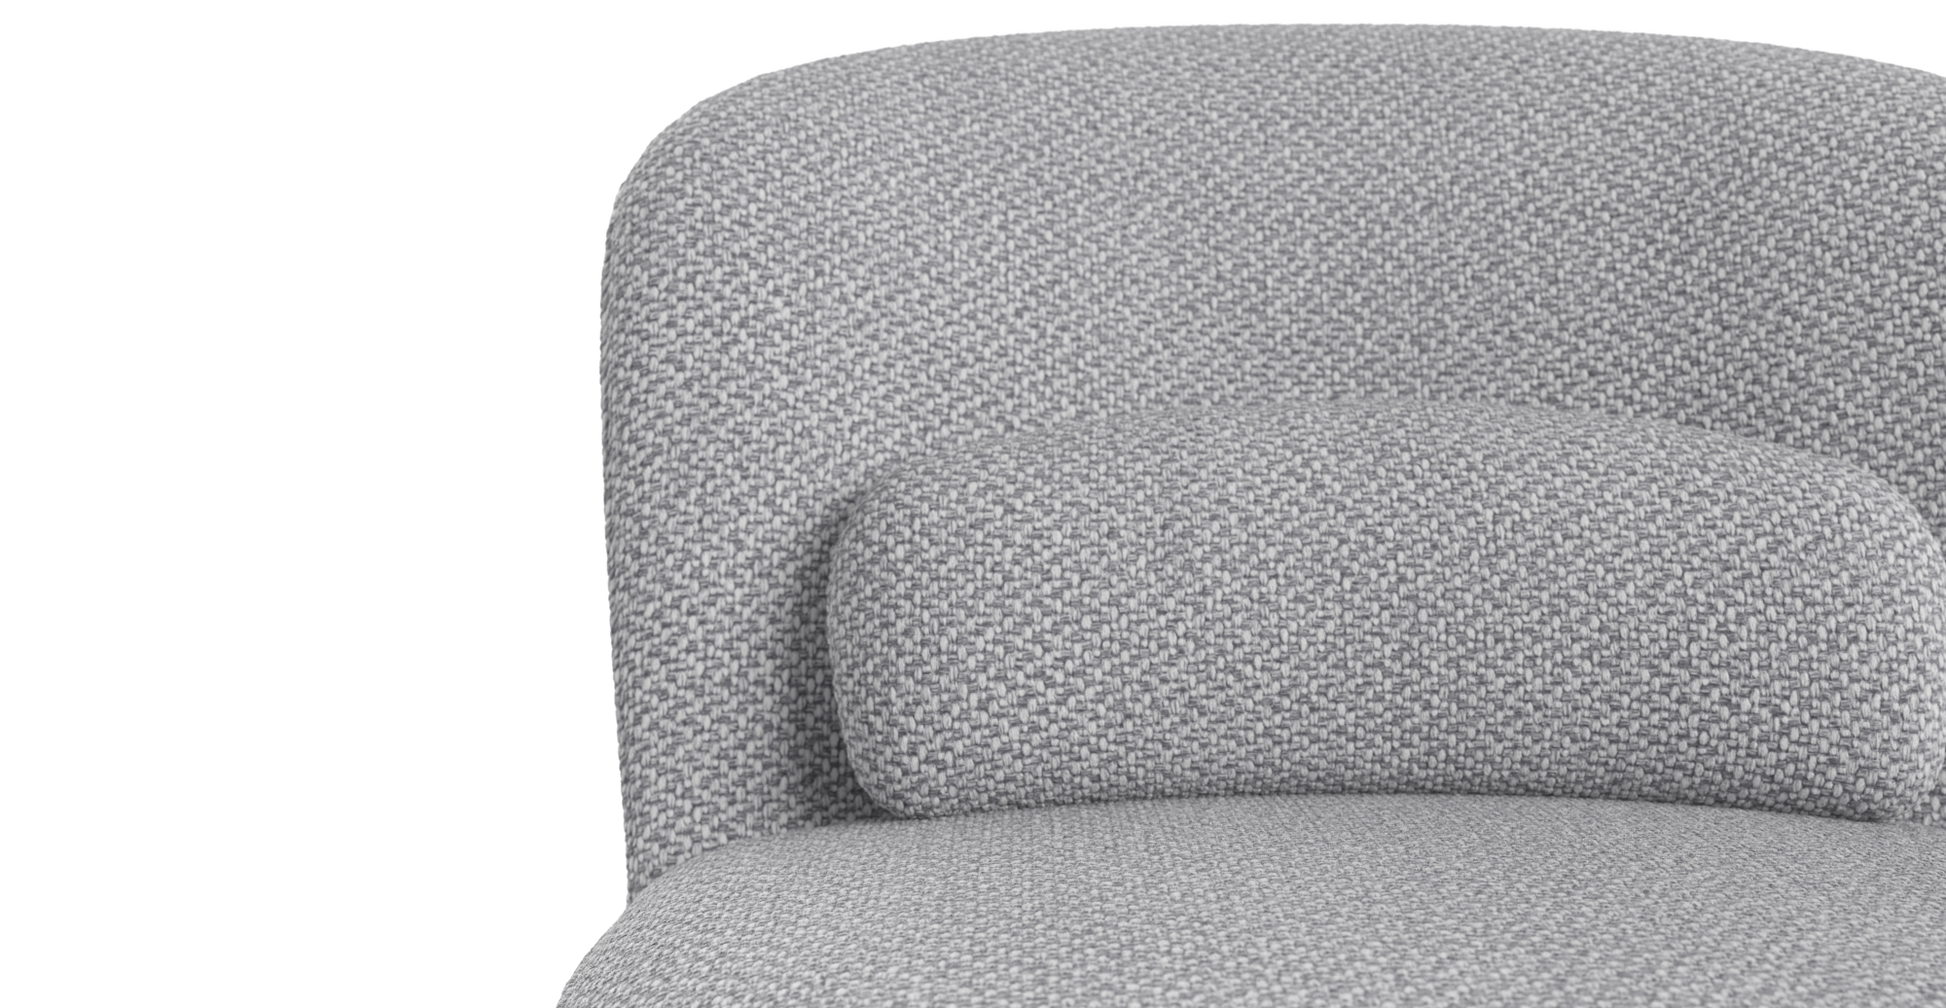 Brosa Ada Swivel Accent Chair (Gainsboro Grey)